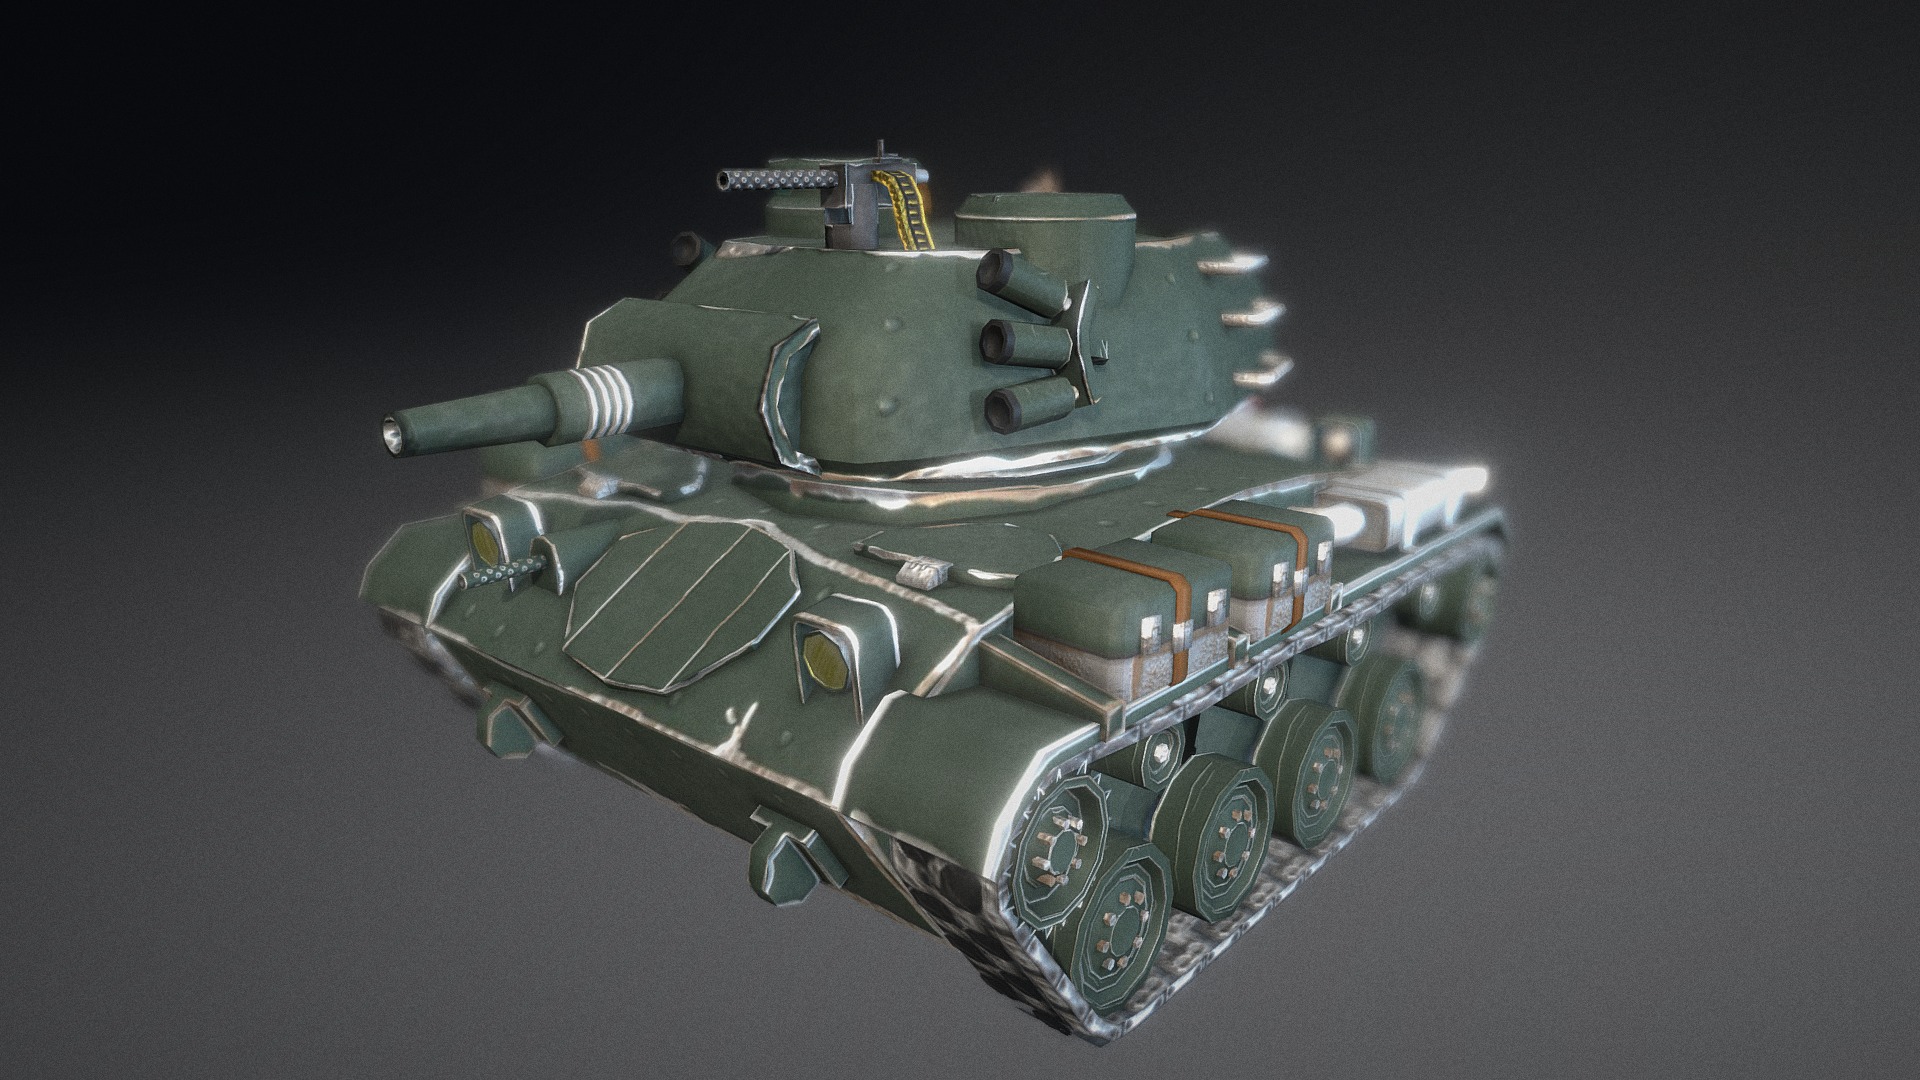 3D model MK.14 medium tank - This is a 3D model of the MK.14 medium tank. The 3D model is about a green military tank.